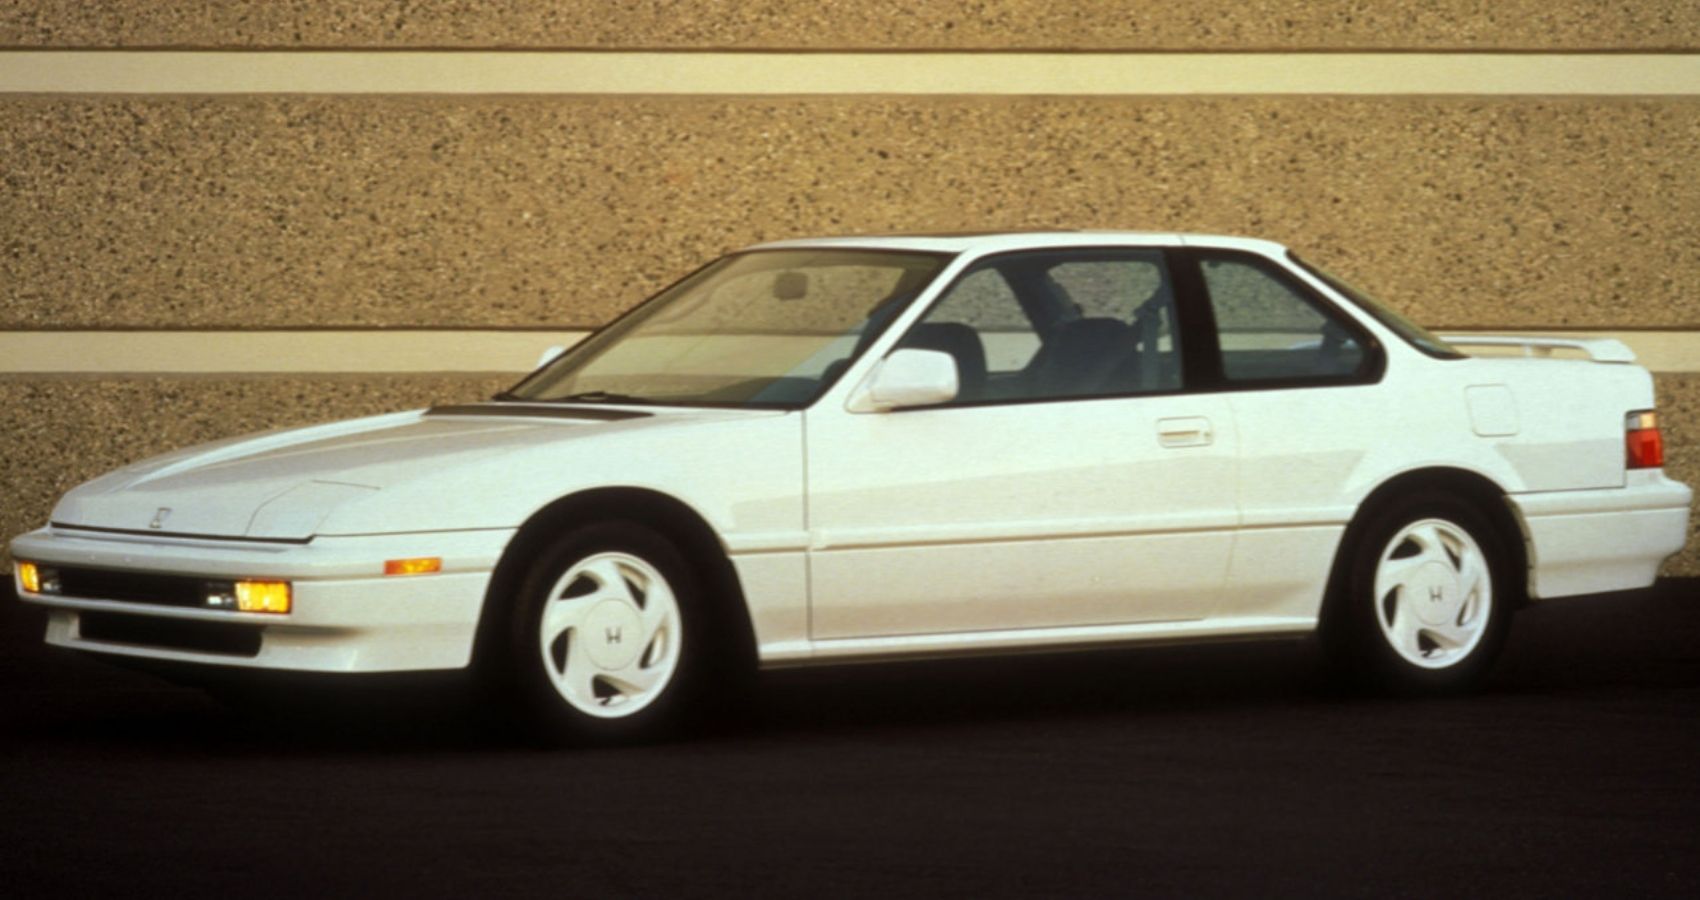 1991 Honda Prelude Si on the driveway